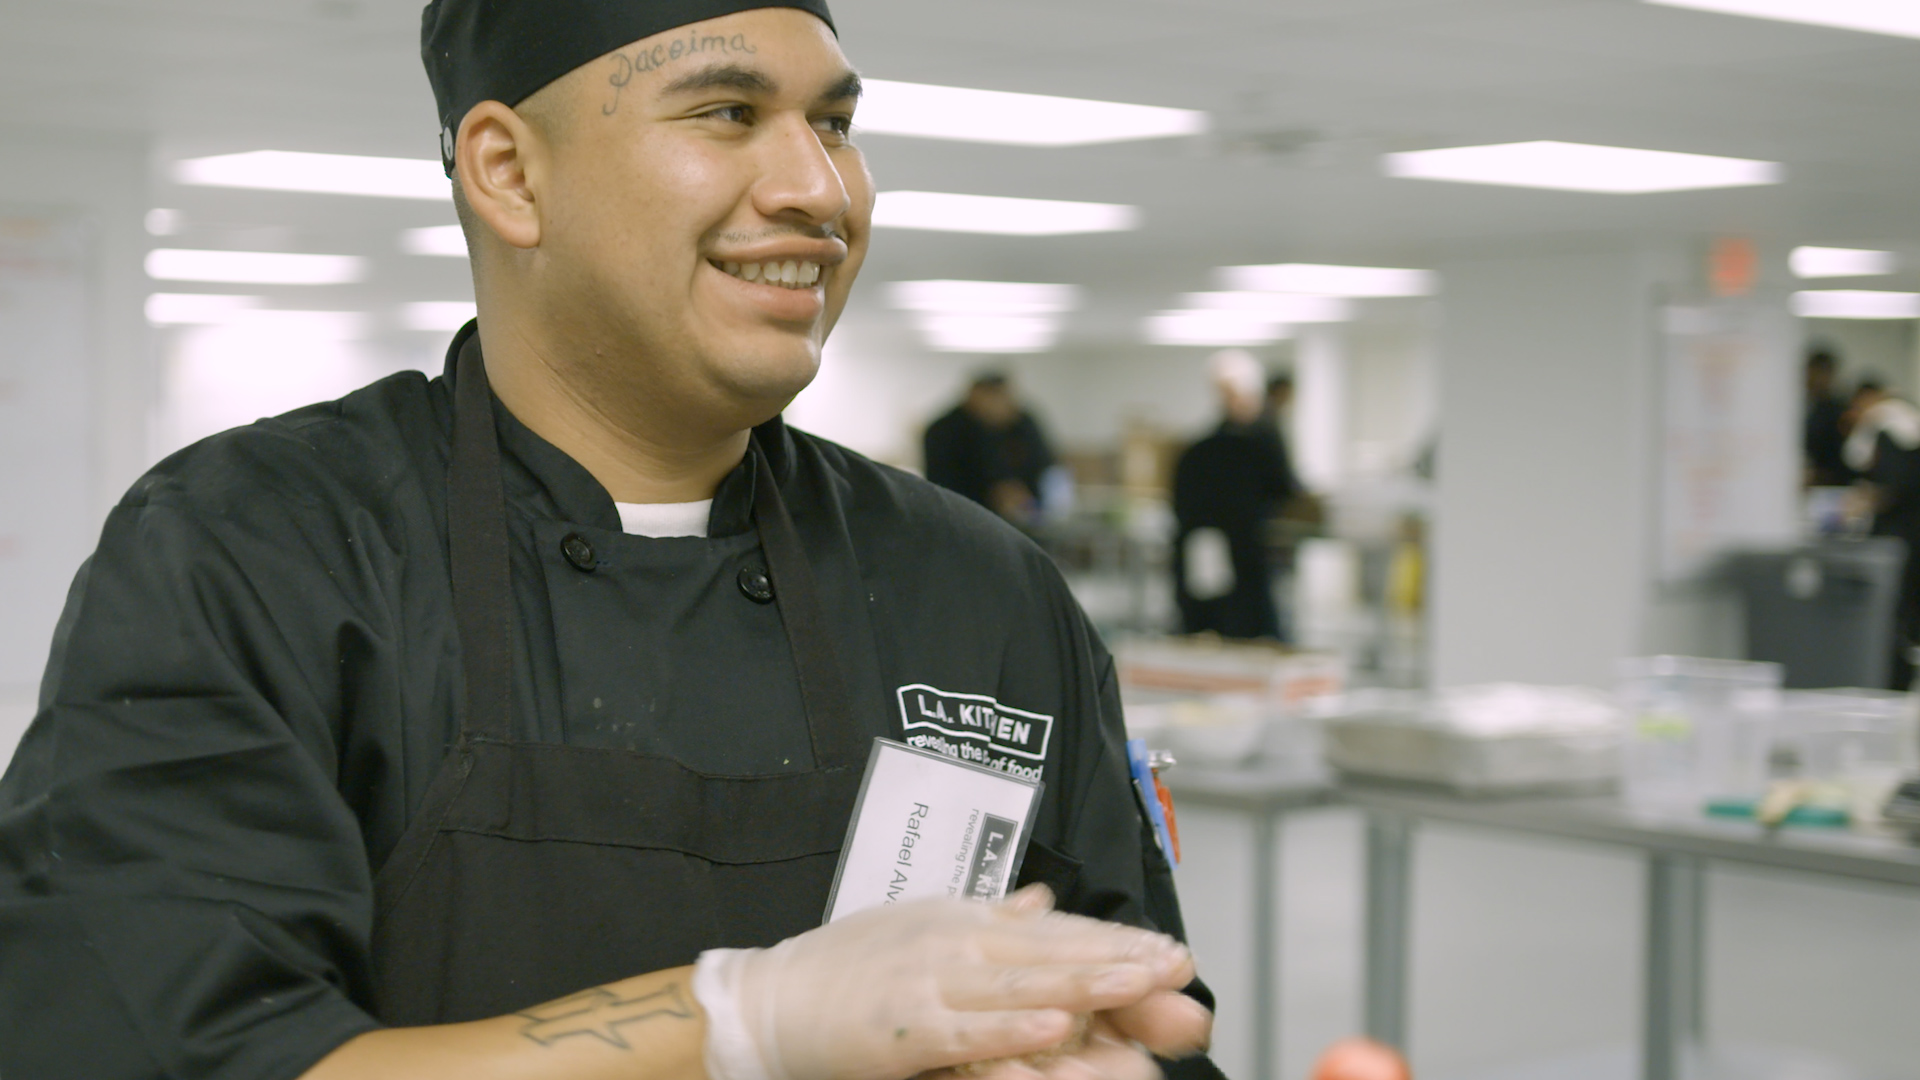 an LA Kitchen student smiling.